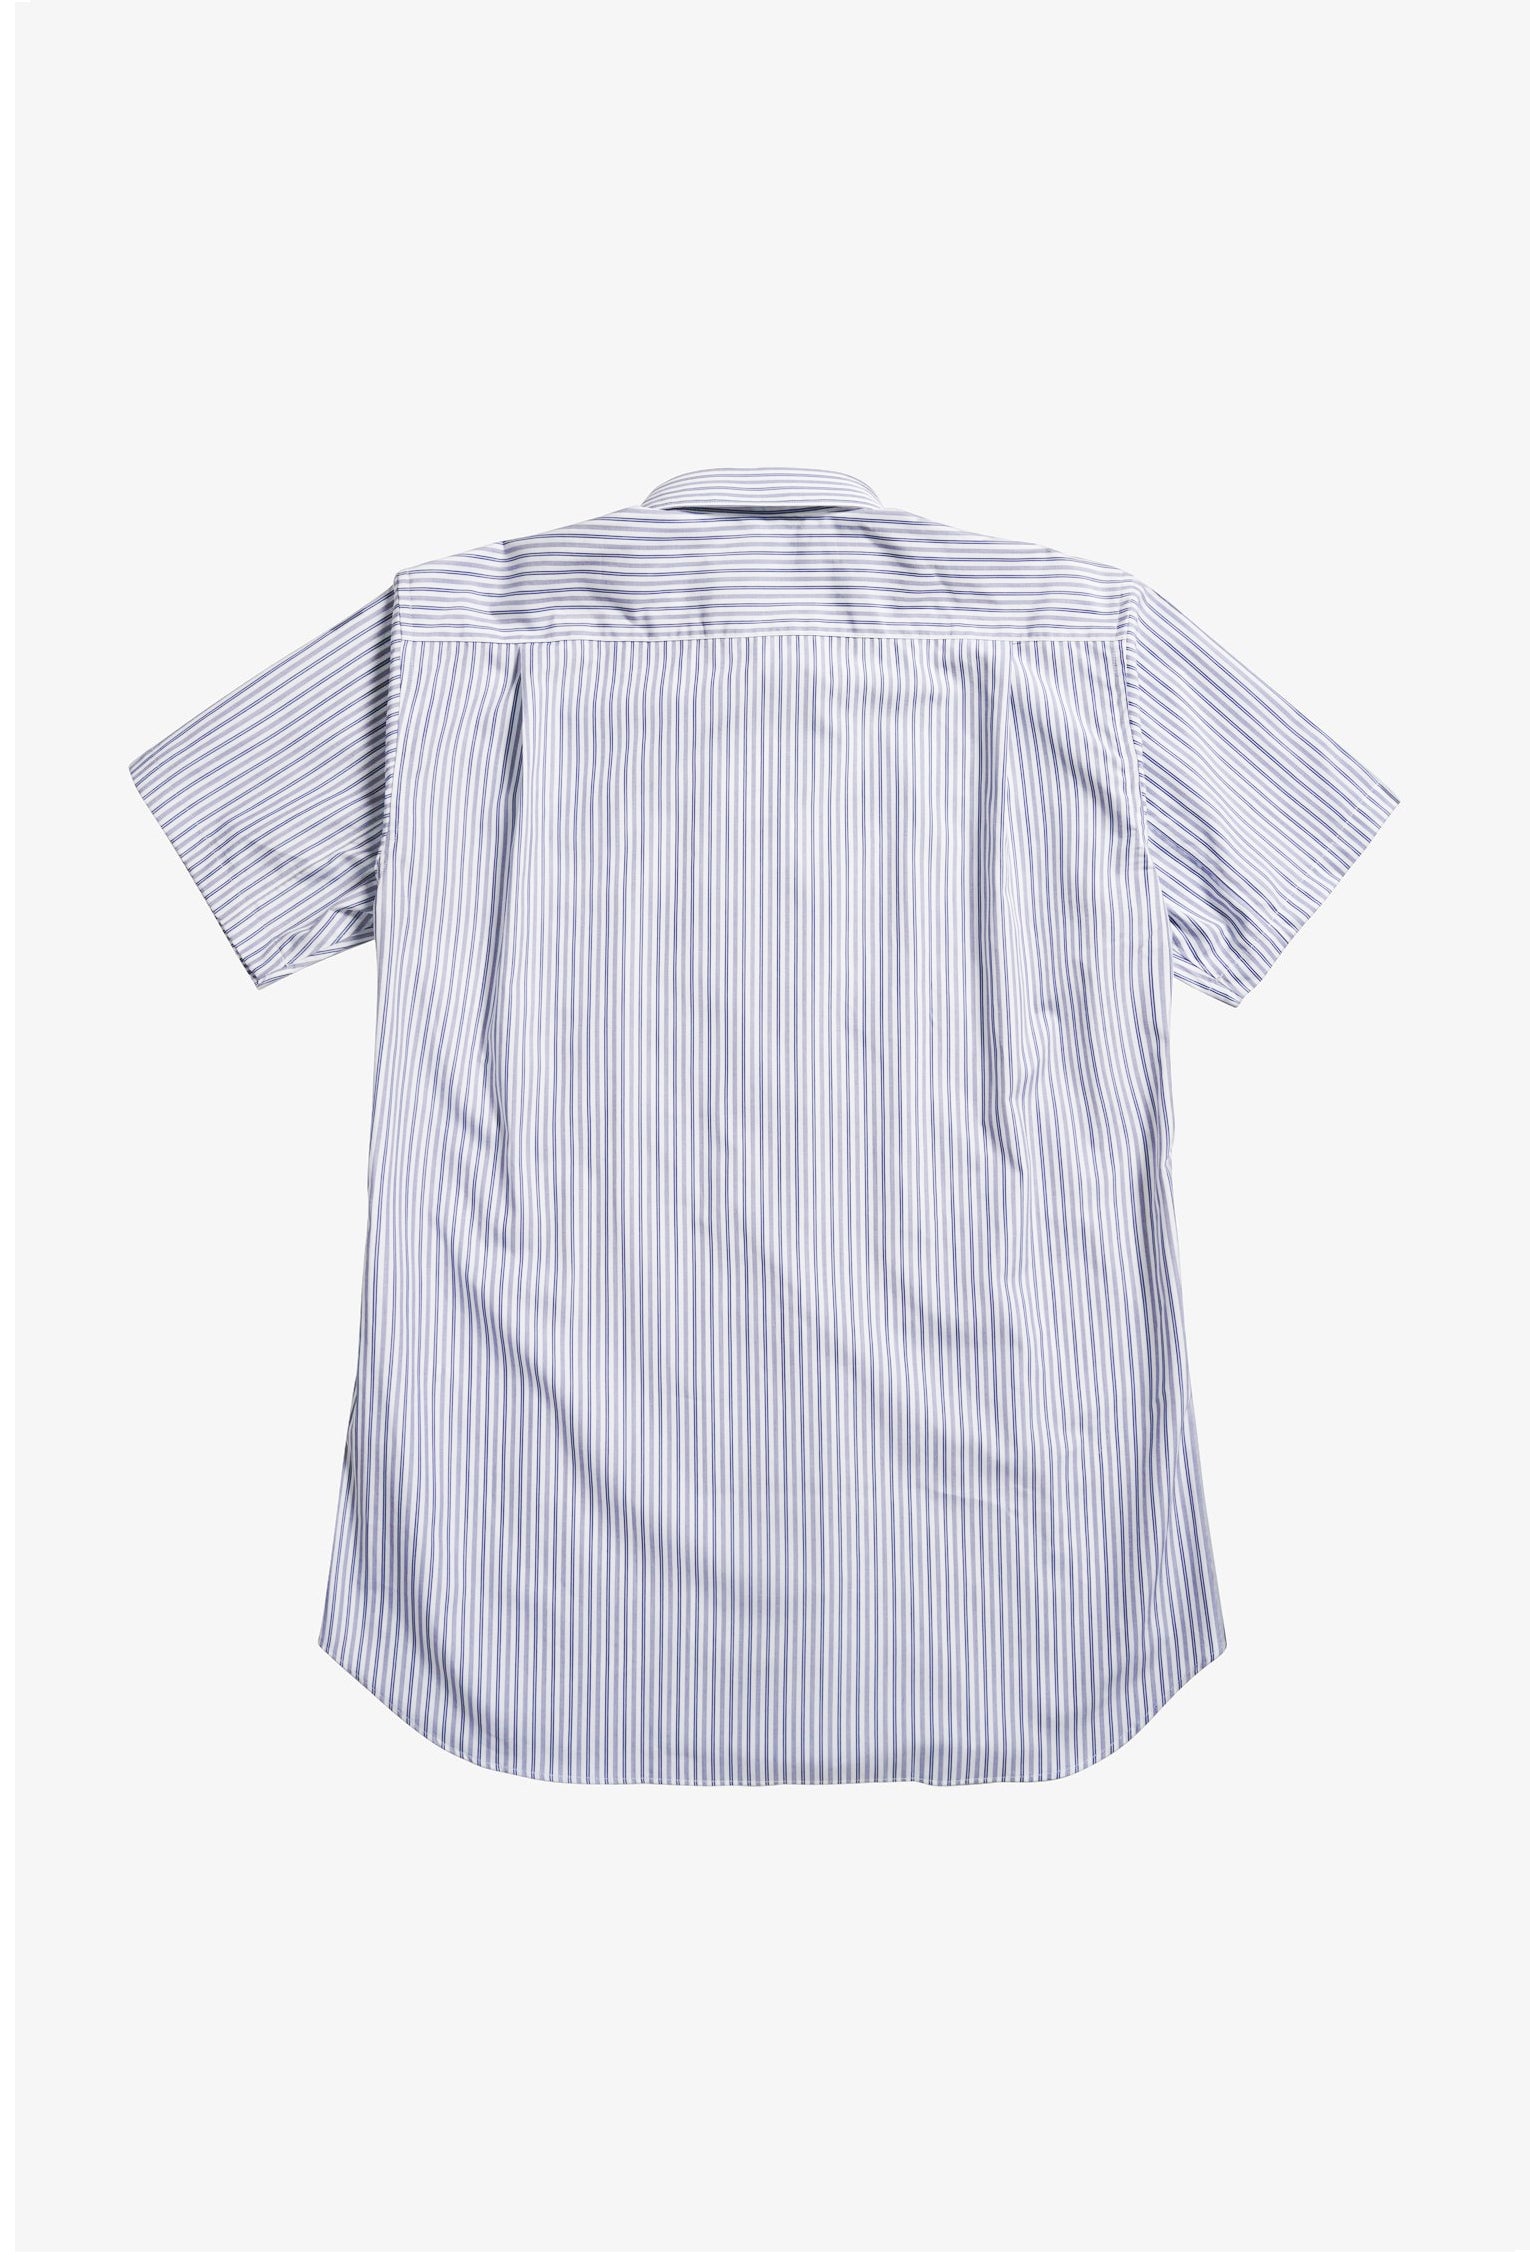 Selectshop FRAME - COMME DES GARÇONS SHIRT Quilt Blocks Pinstripe Shirt Shirts Dubai